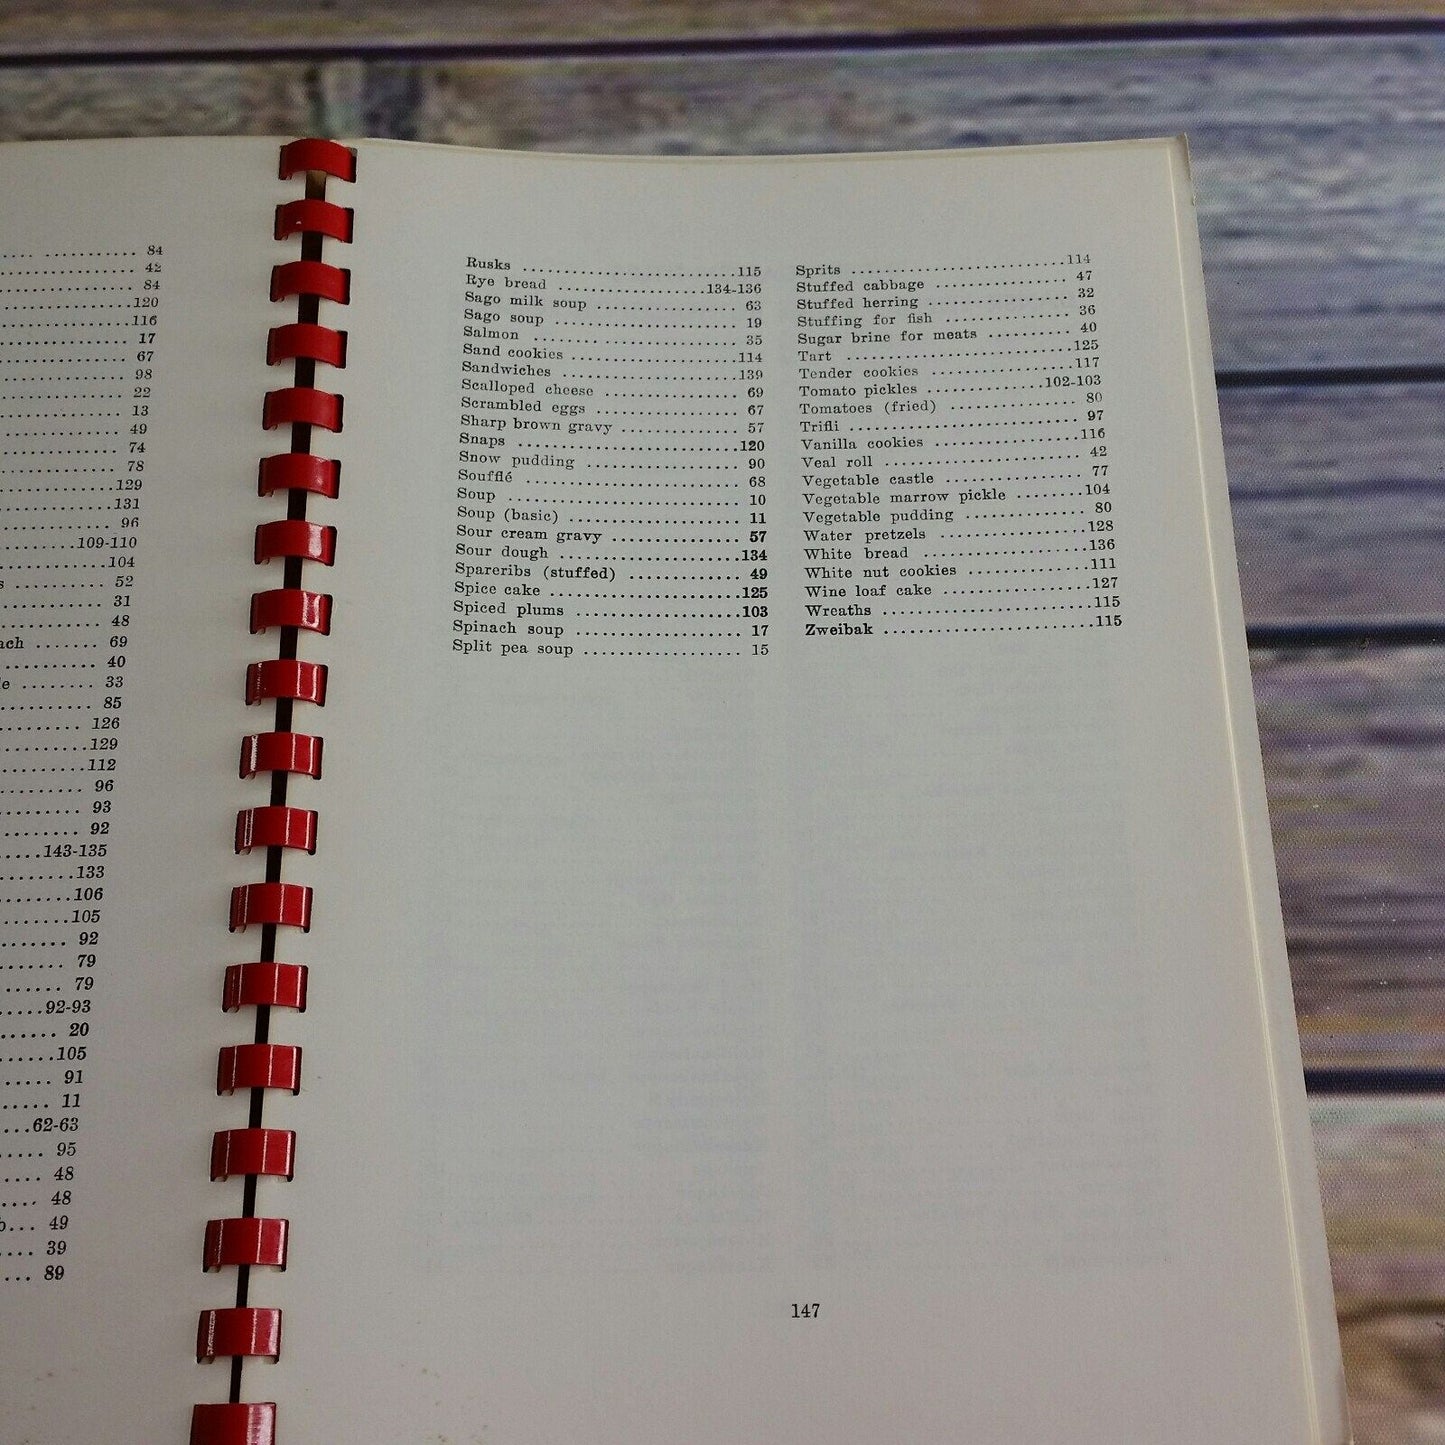 Vintage Washington Cookbook From Danish Kitchens St Johns Evangelical Lutheran Church Spiral Bound Community Recipes